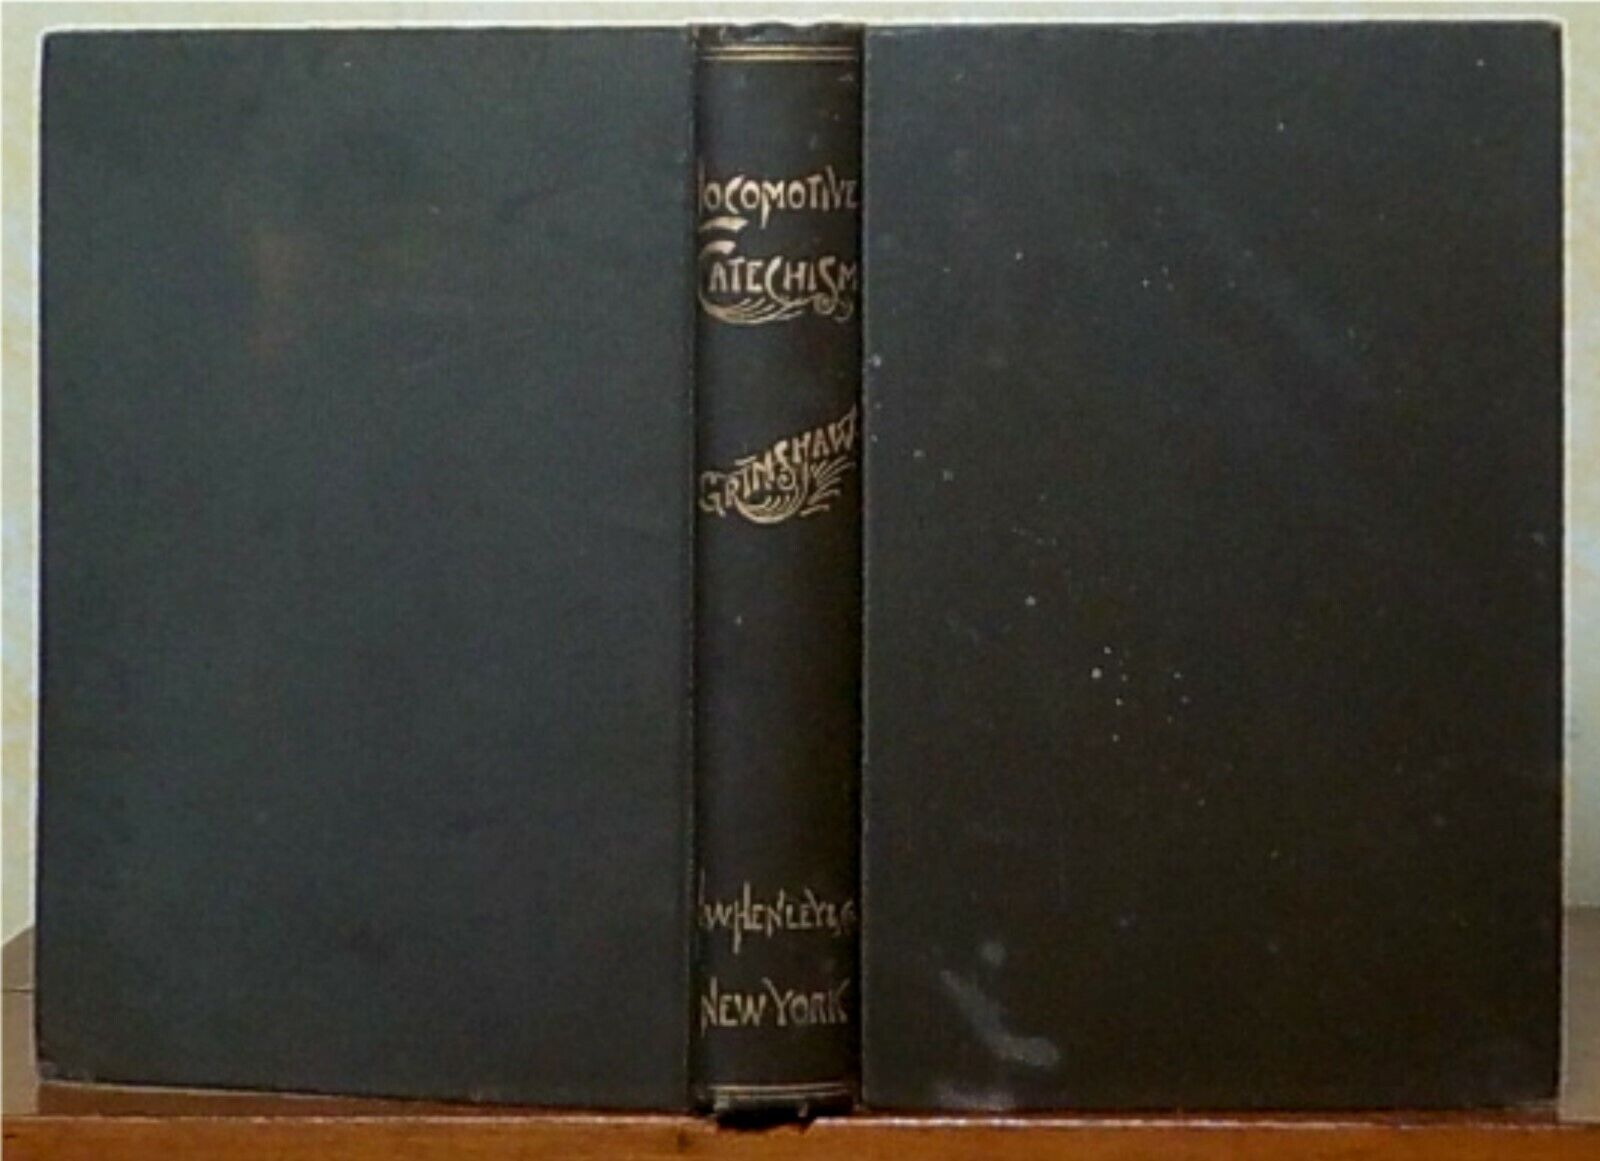 Locomotive Catechism by Robert Grimshaw, M.E., 1893